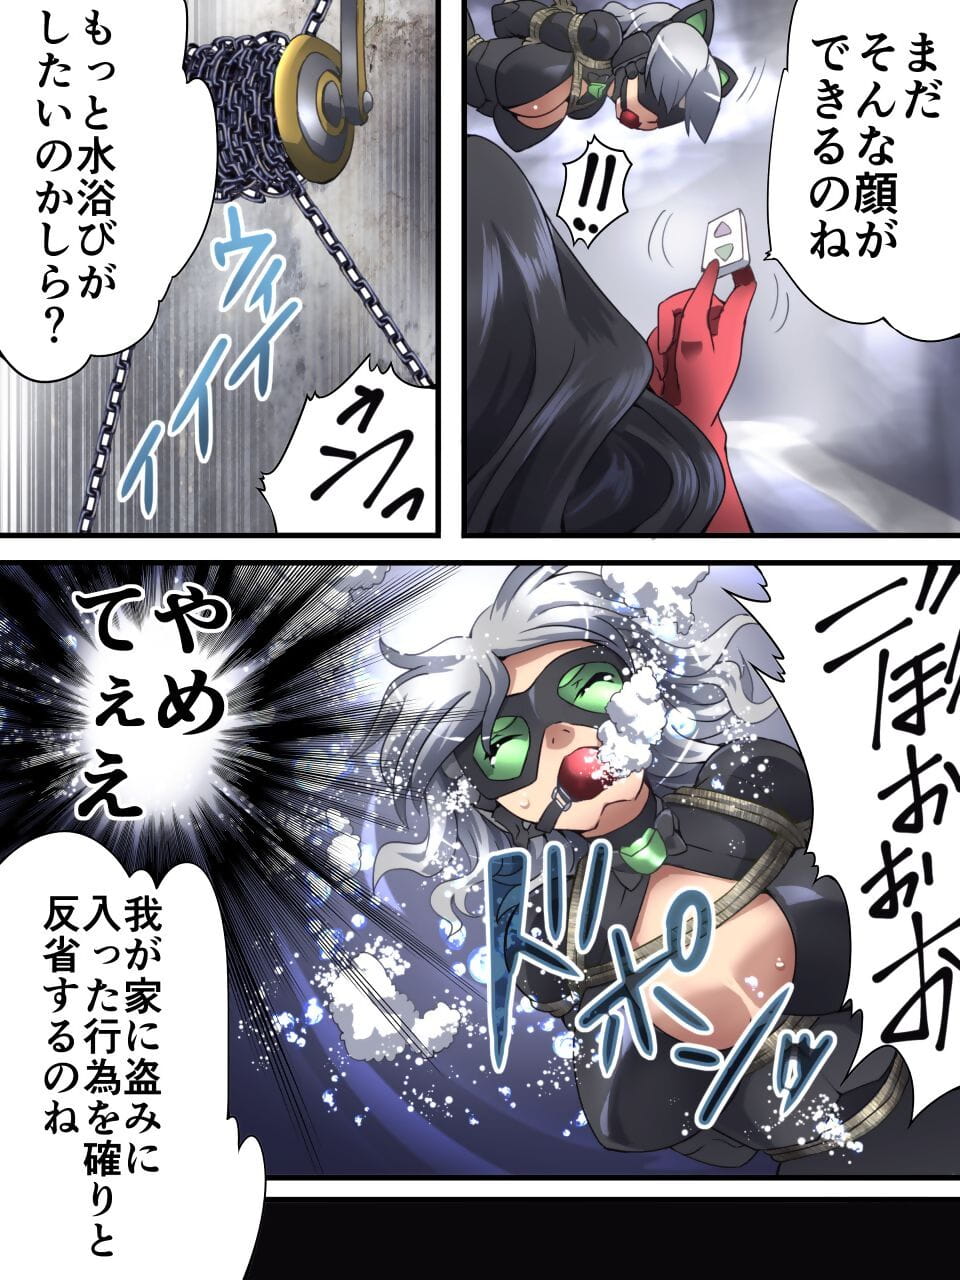 kaitou Silber Katze manga ban Dai wa page 1